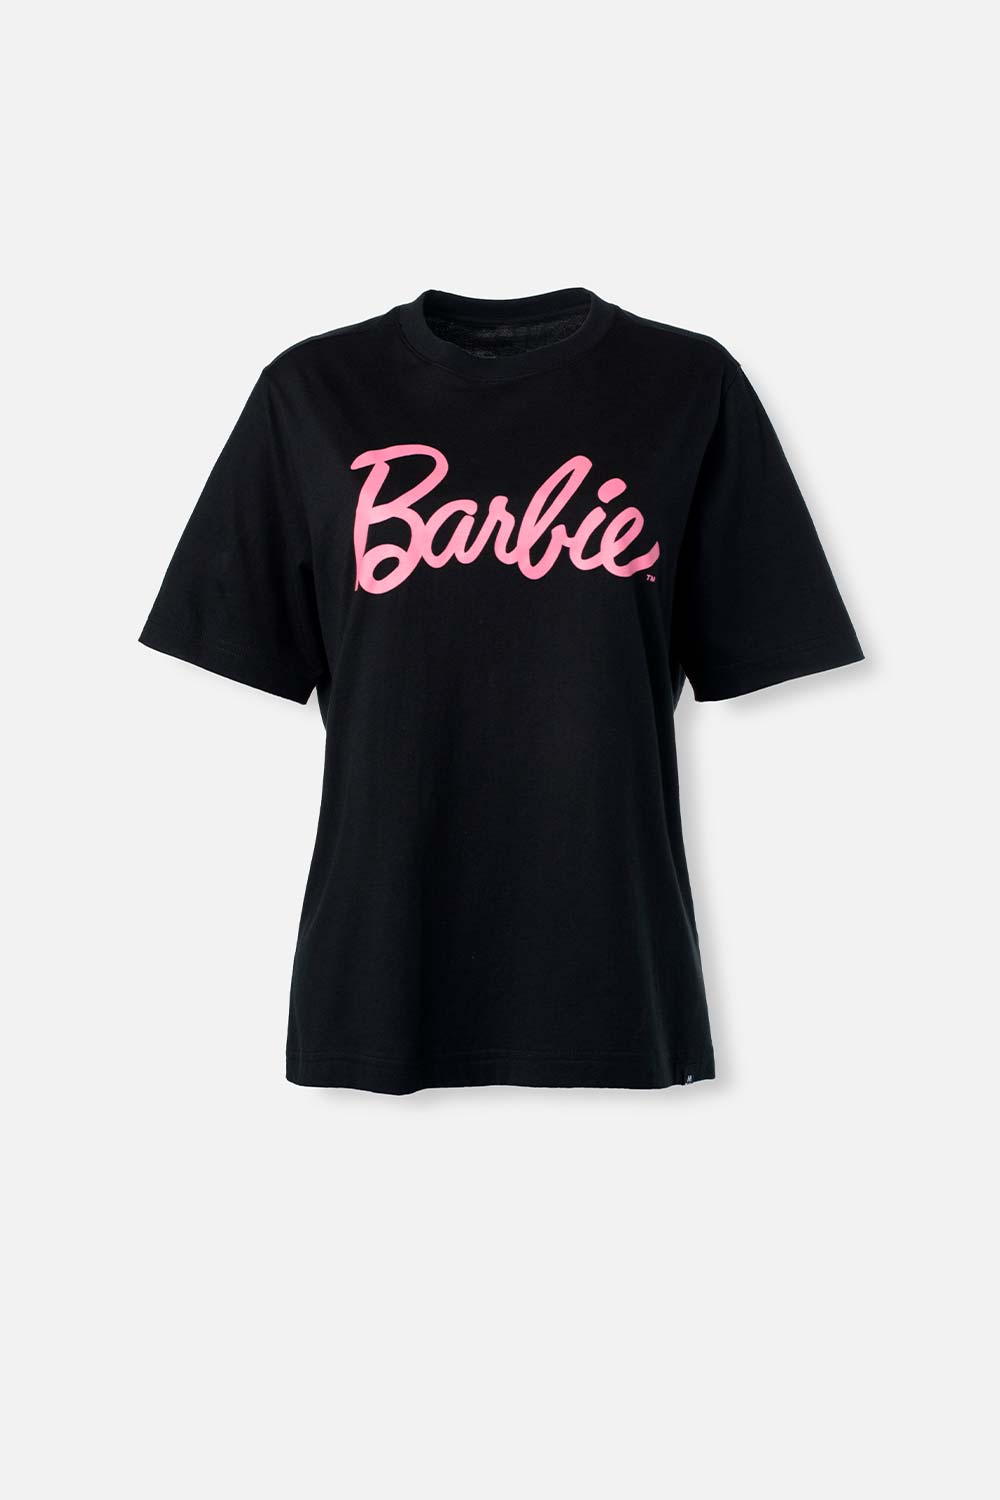 Camiseta de Barbie negra manga corta para mujer XS-0